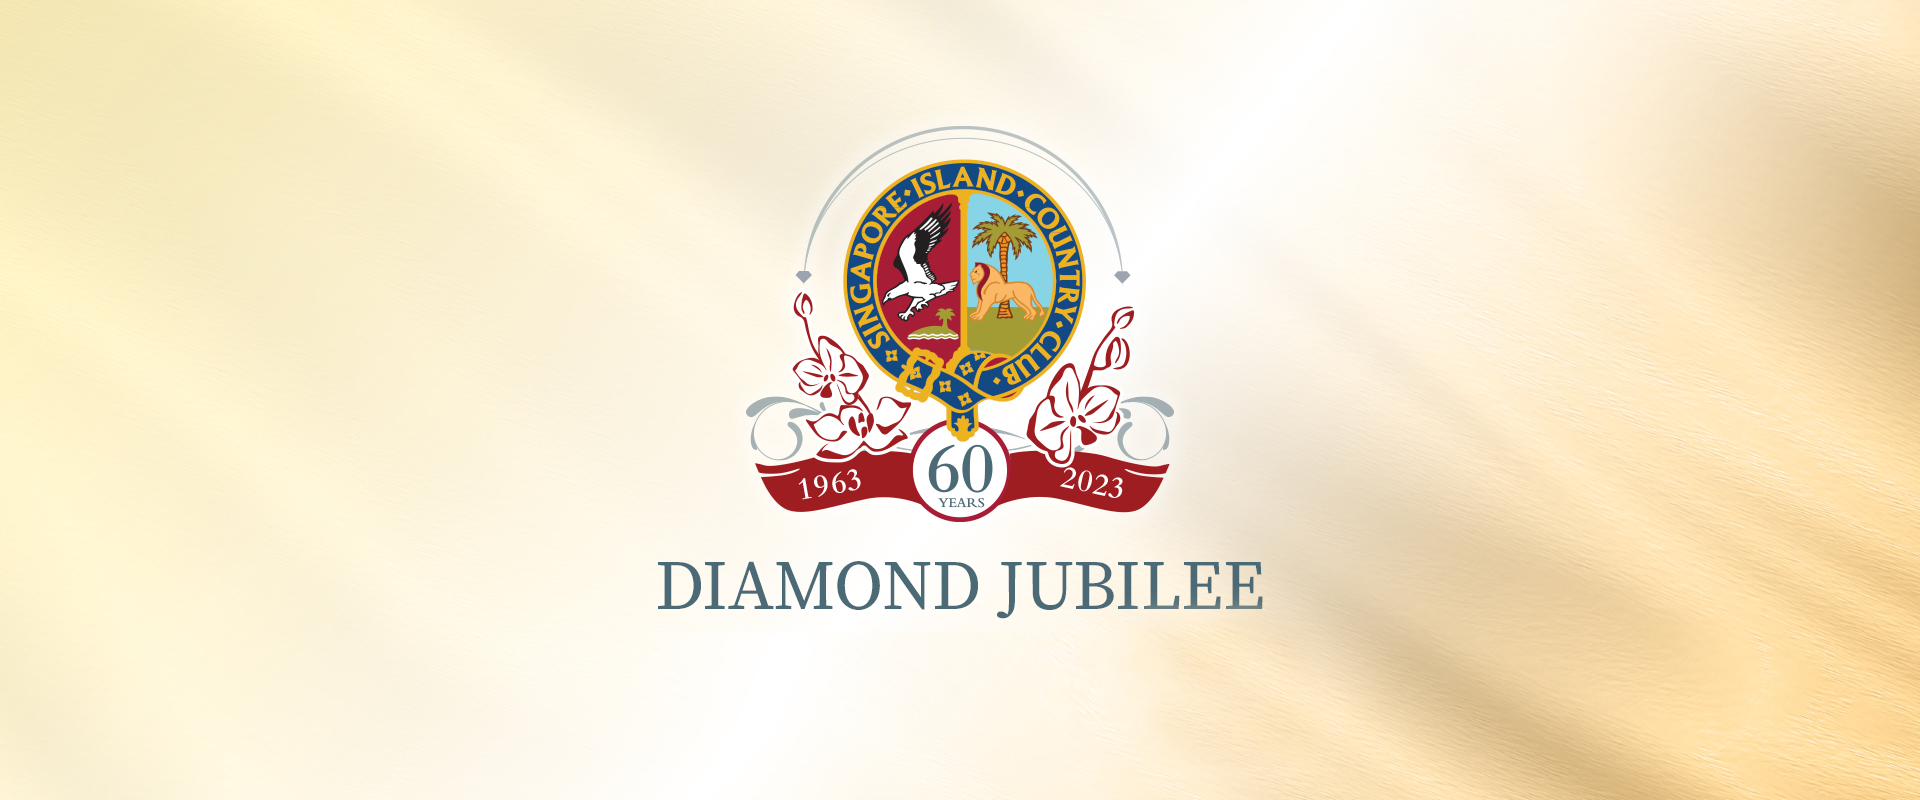 CMAI '60 Years' Diamond Jubilee logo unveiled at FAB Show 2023